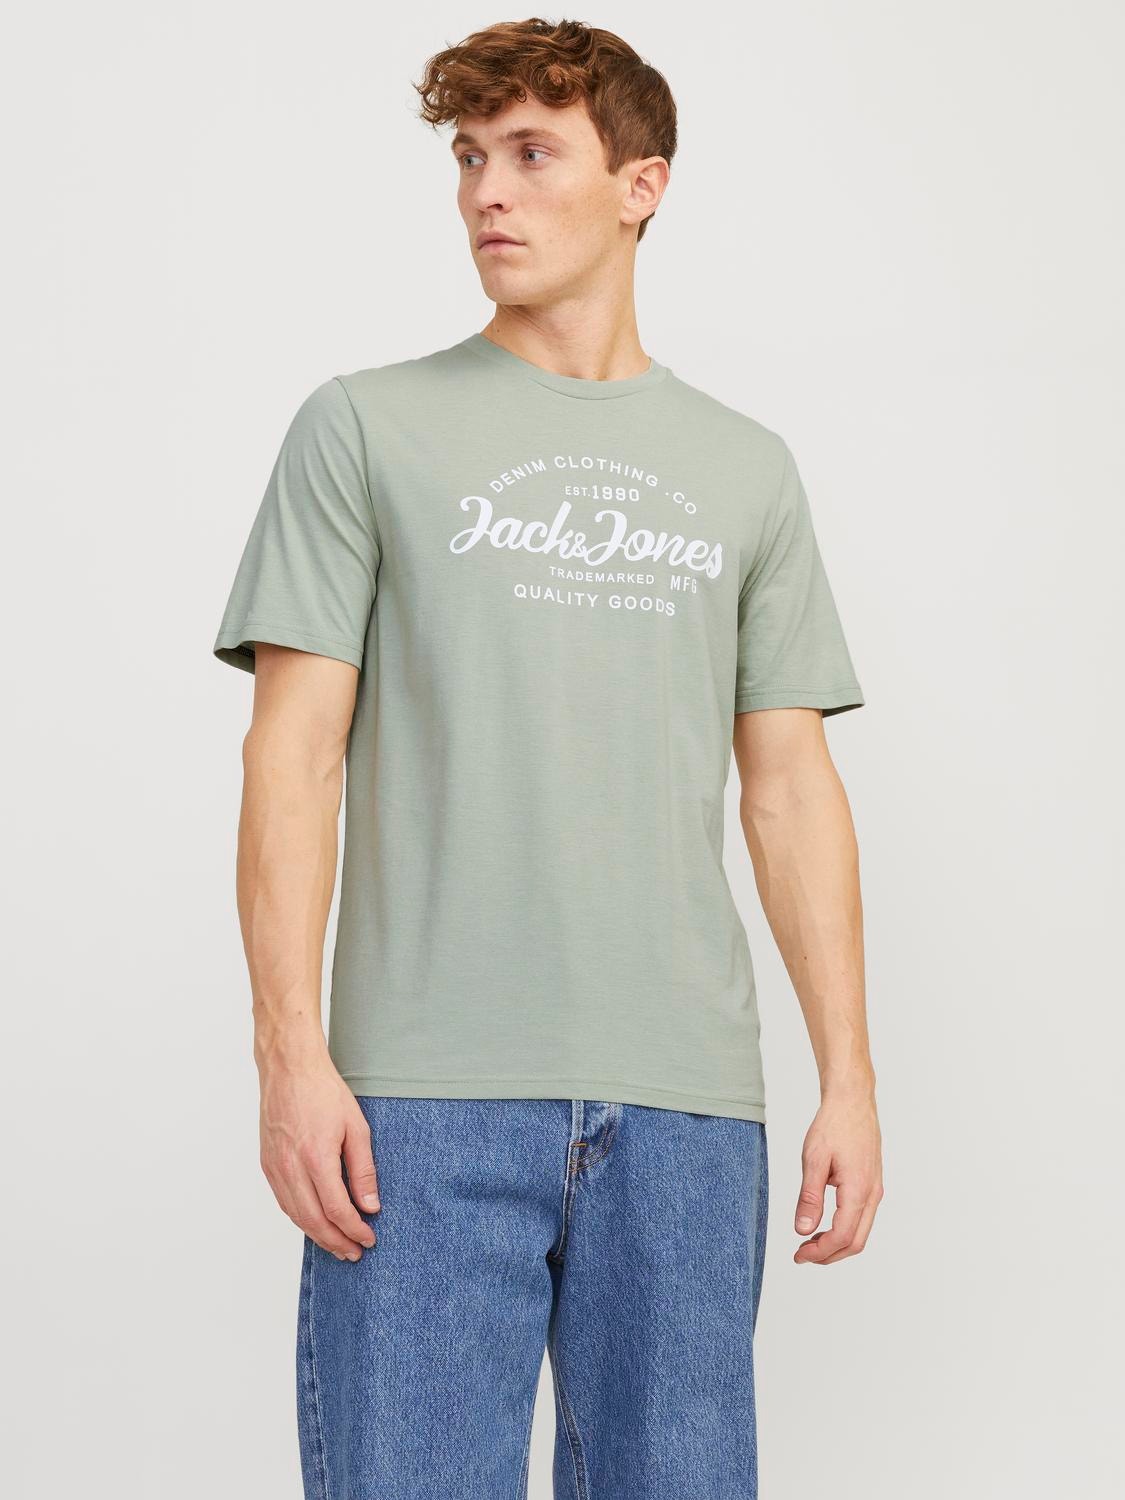 Jack & Jones Printed Crew neck T-shirt -Desert Sage - 12247972